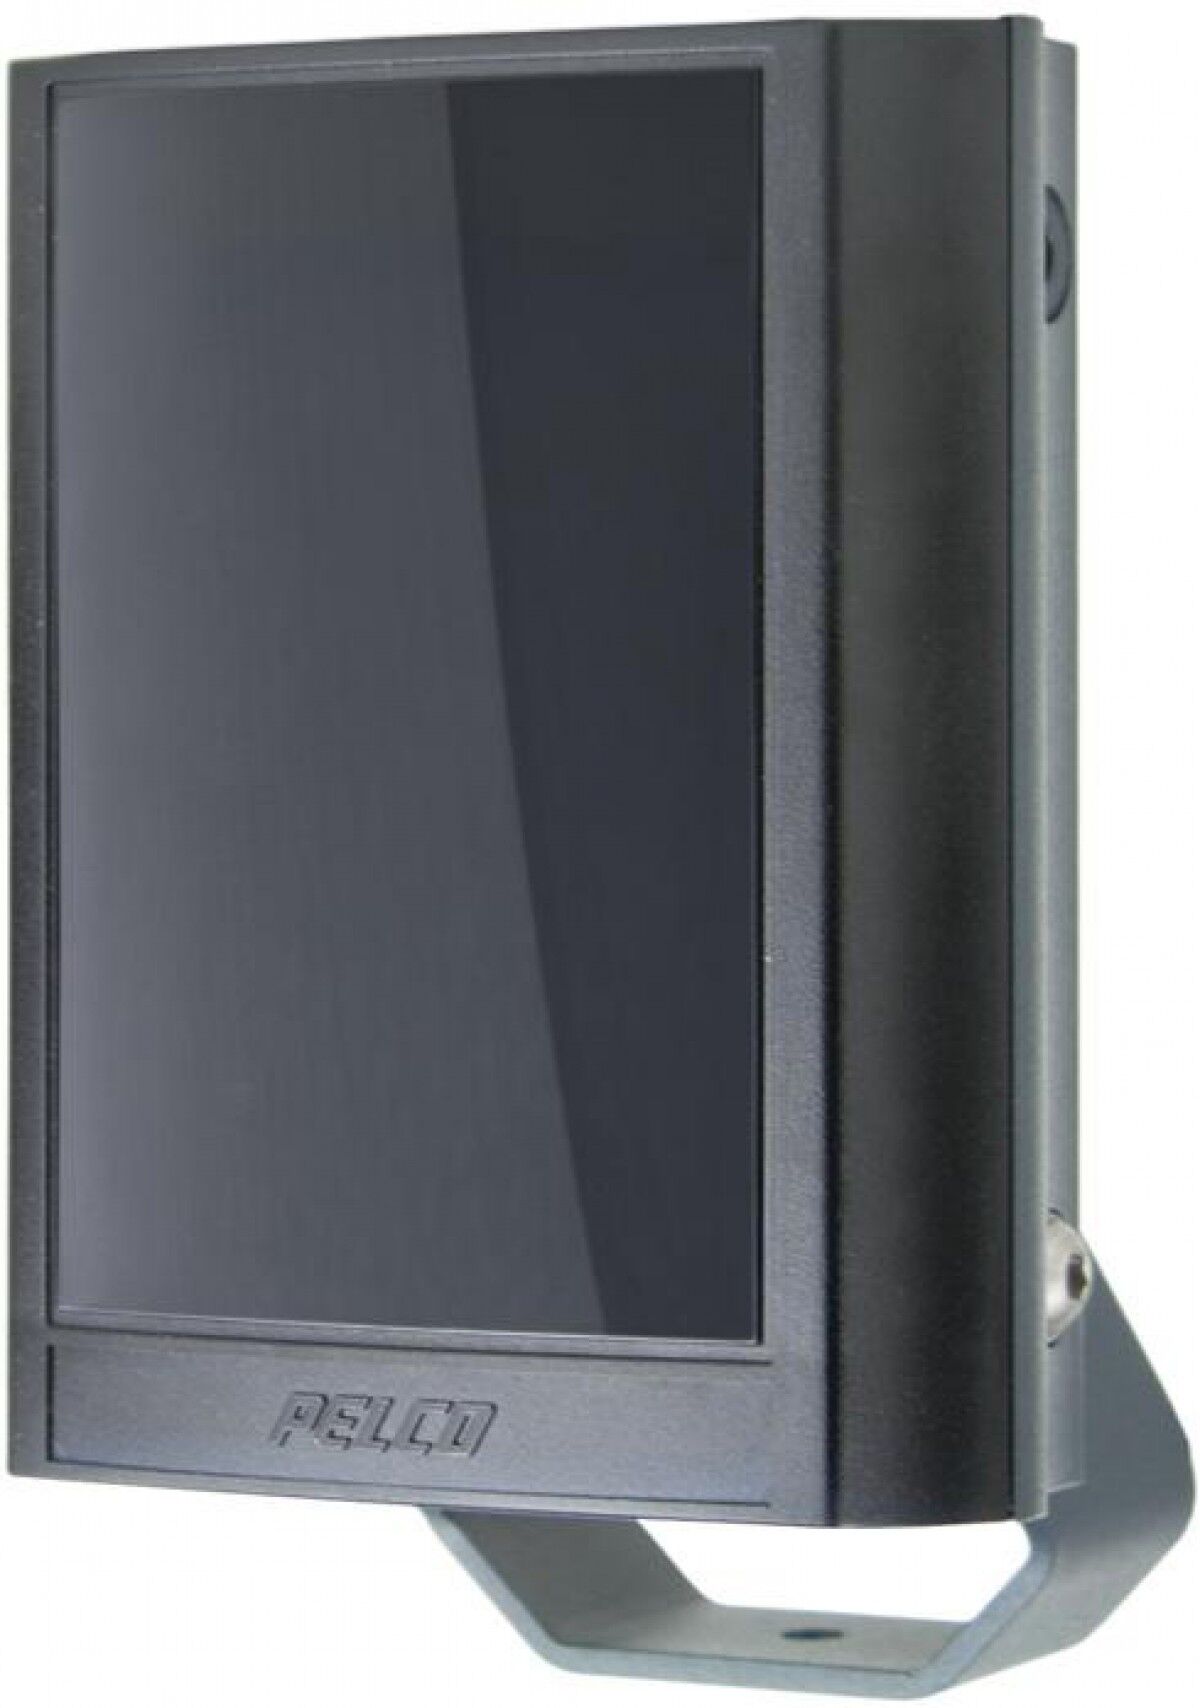 ИК подсветка Pelco IR850M-120